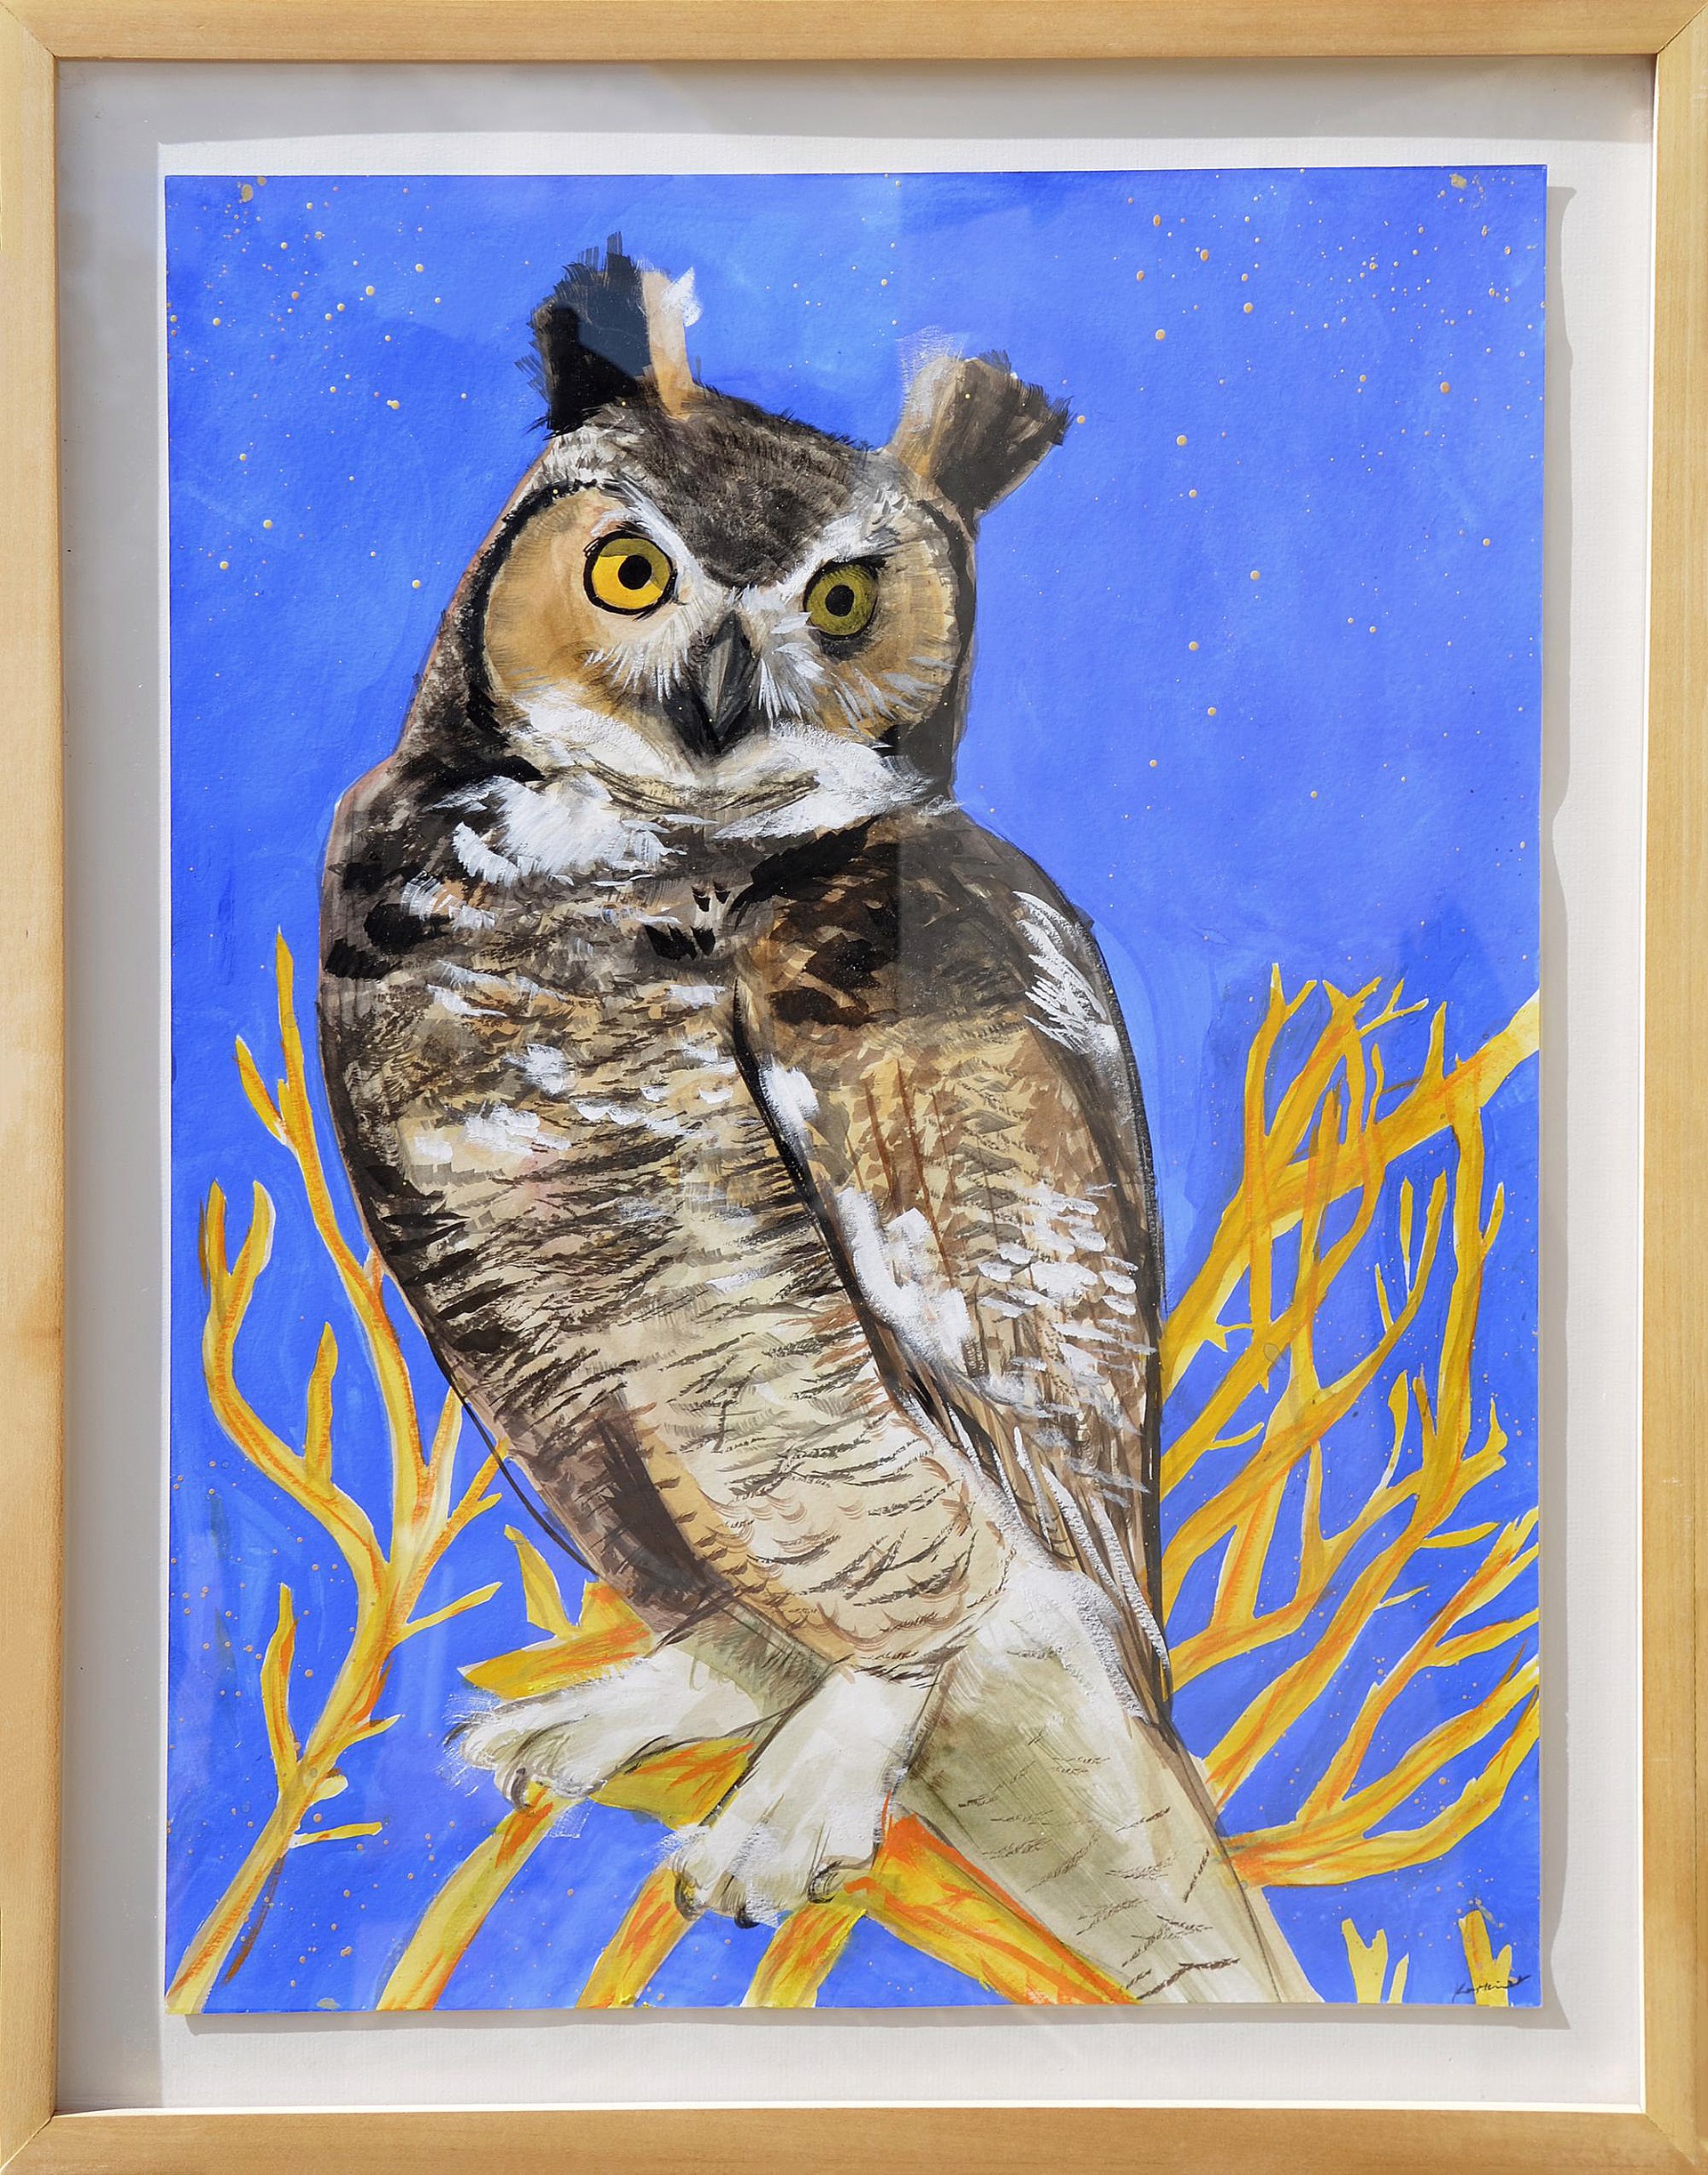 Our Neighborhood Great Horned Owl by Kat Kinnick